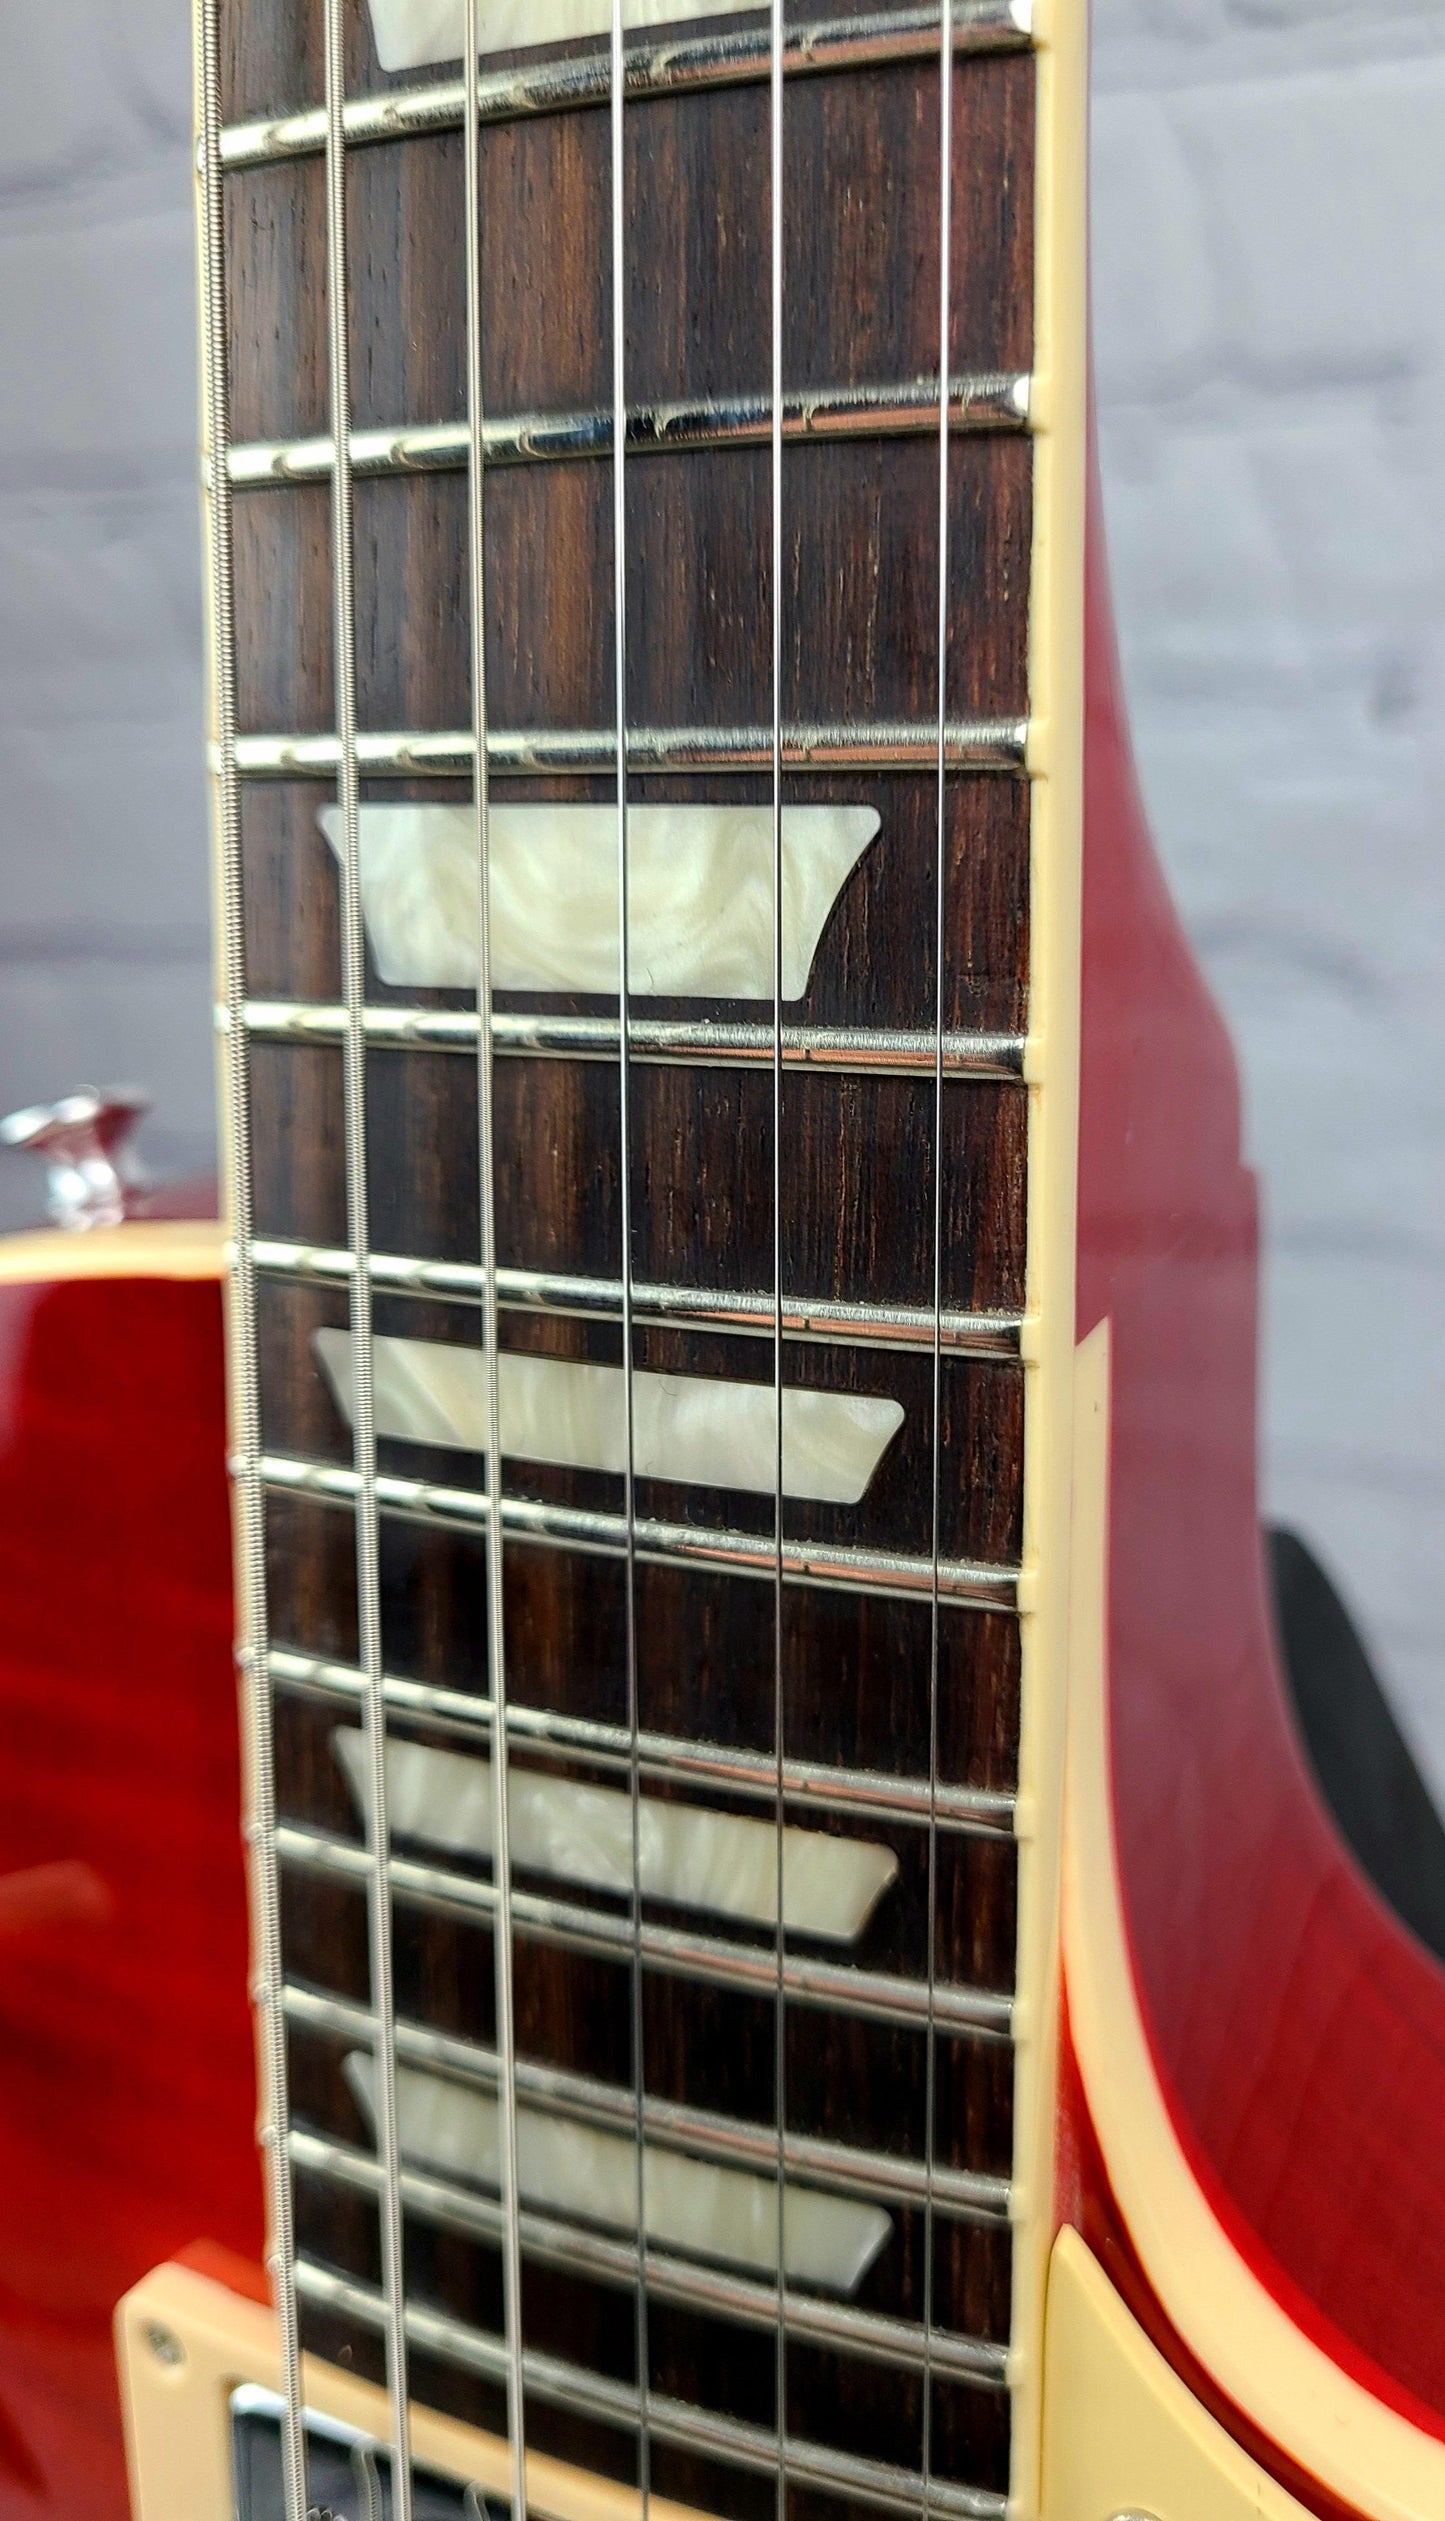 Heritage H-150 VCS Singlecut Electric Guitar Vintage Cherry Sunburst - Guitar Brando